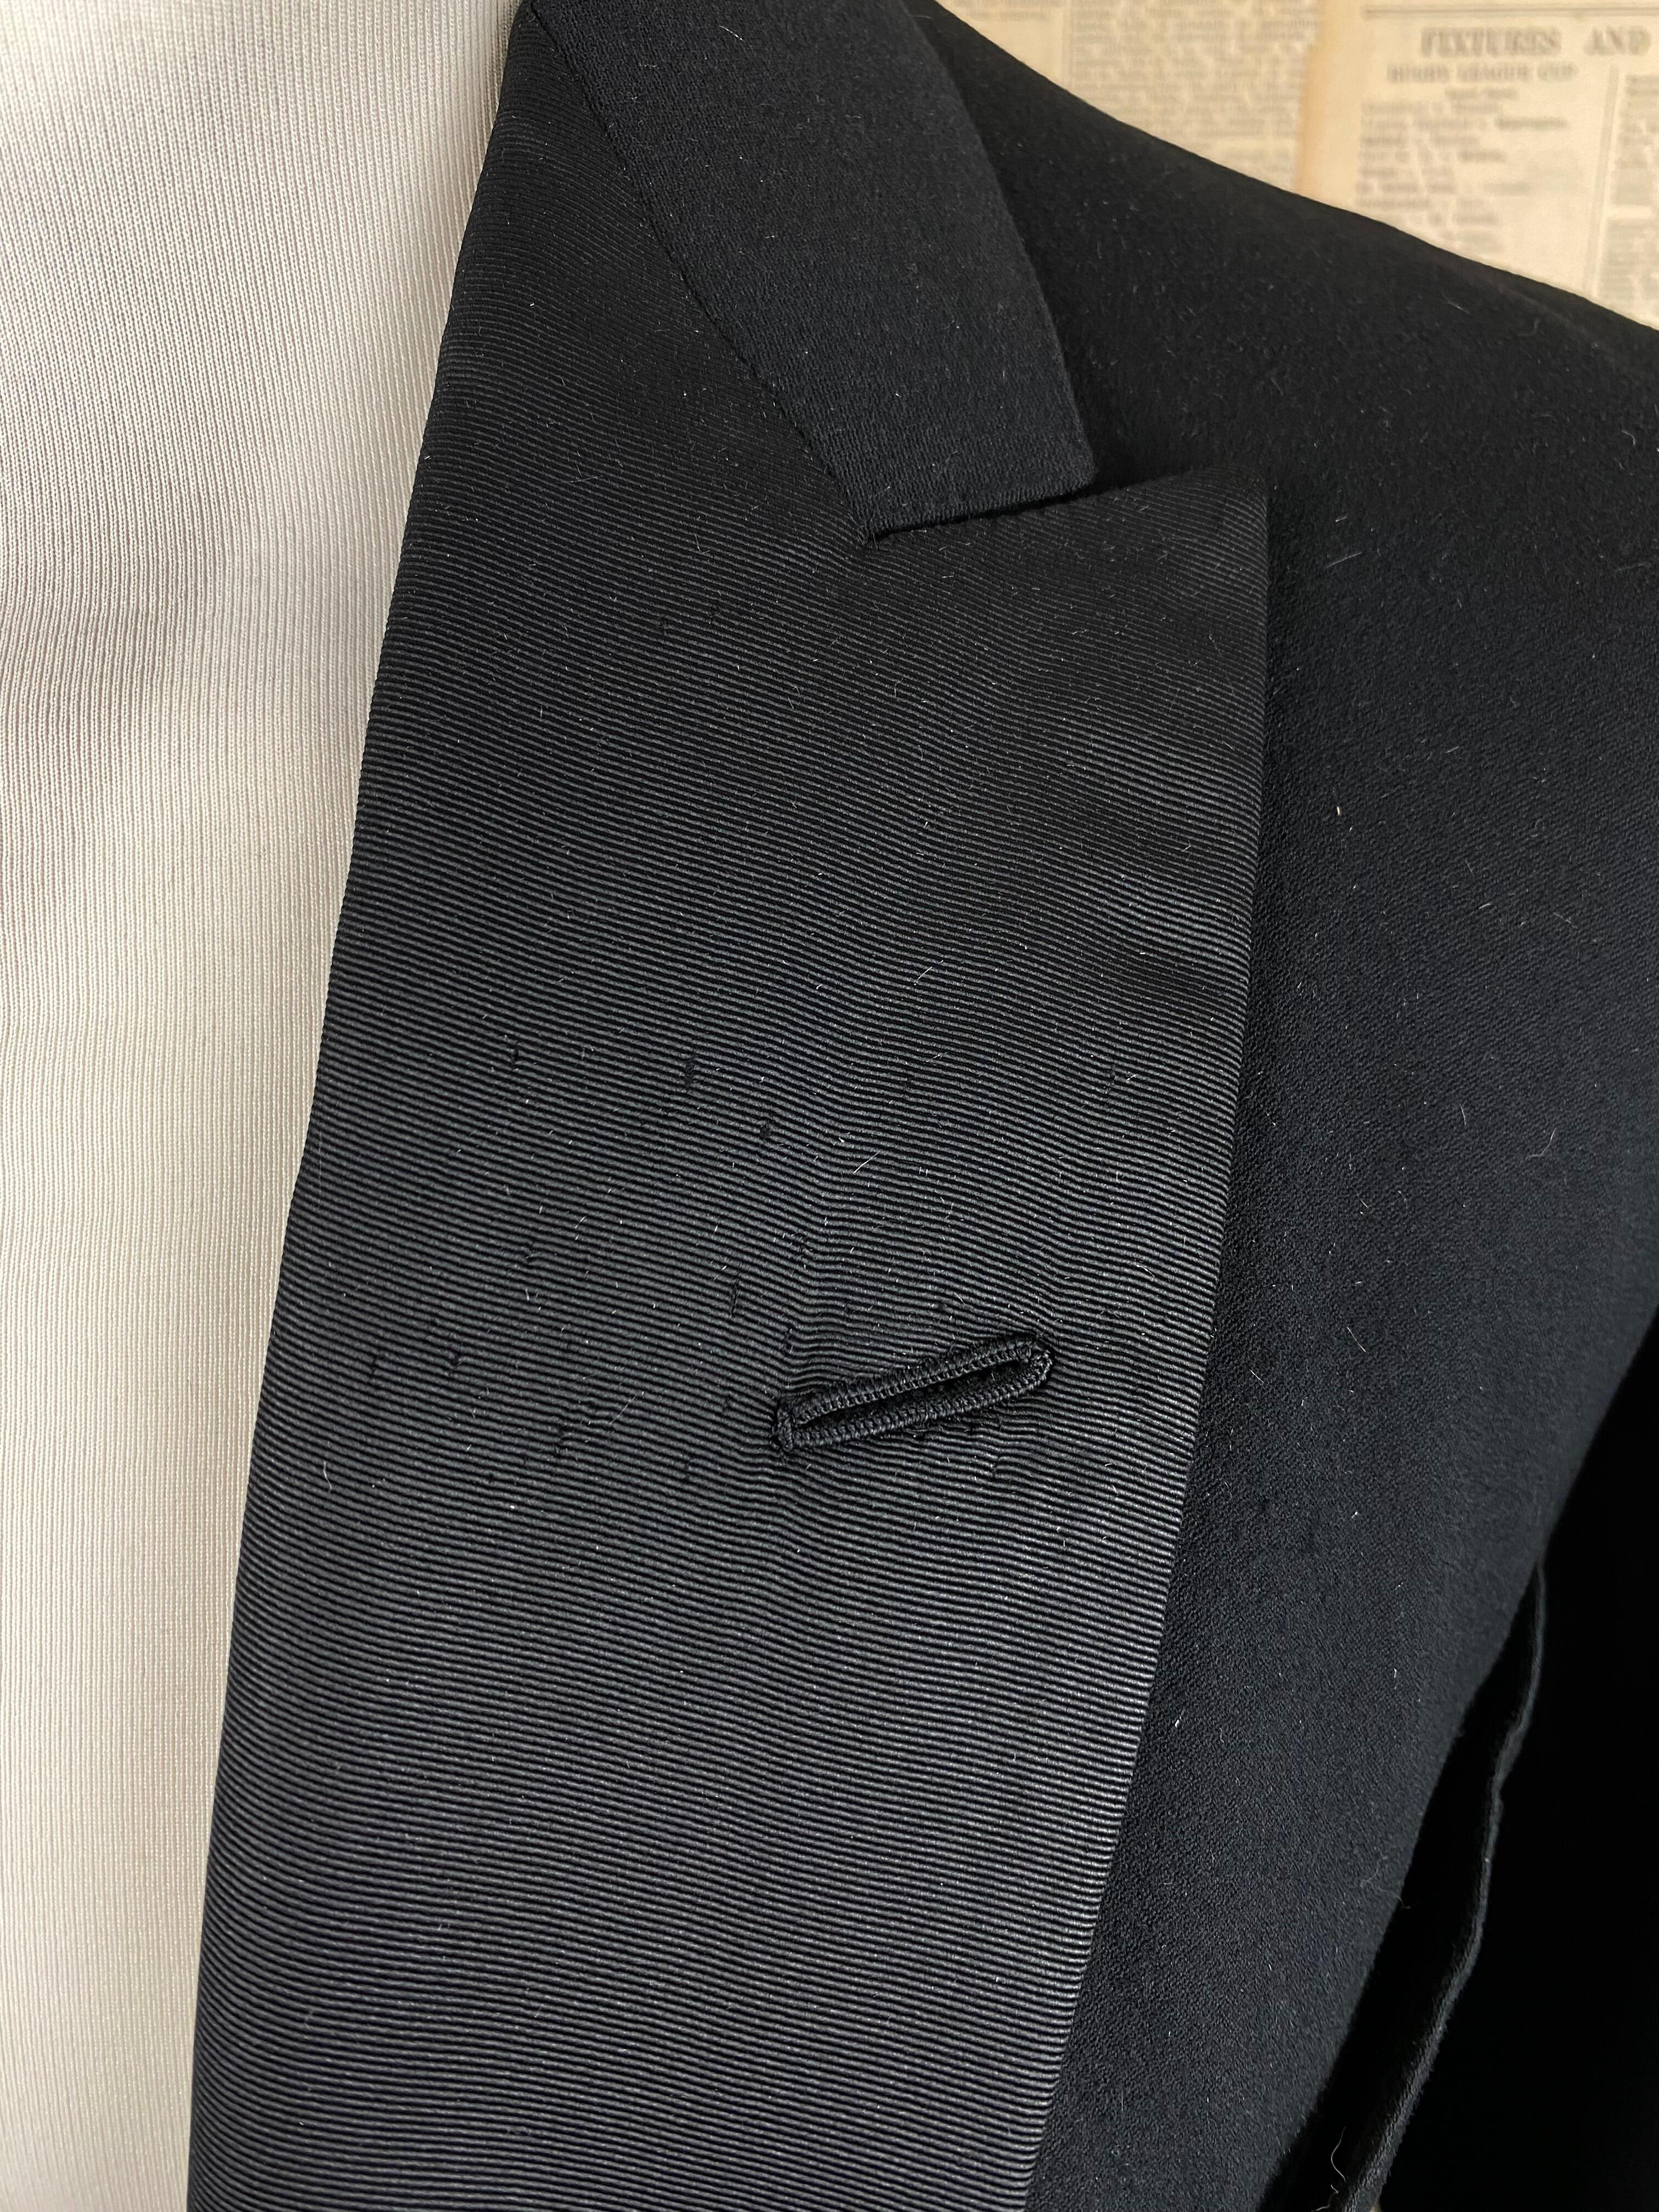 > Vintage bespoke 1920's white tie evening tailcoat size 40